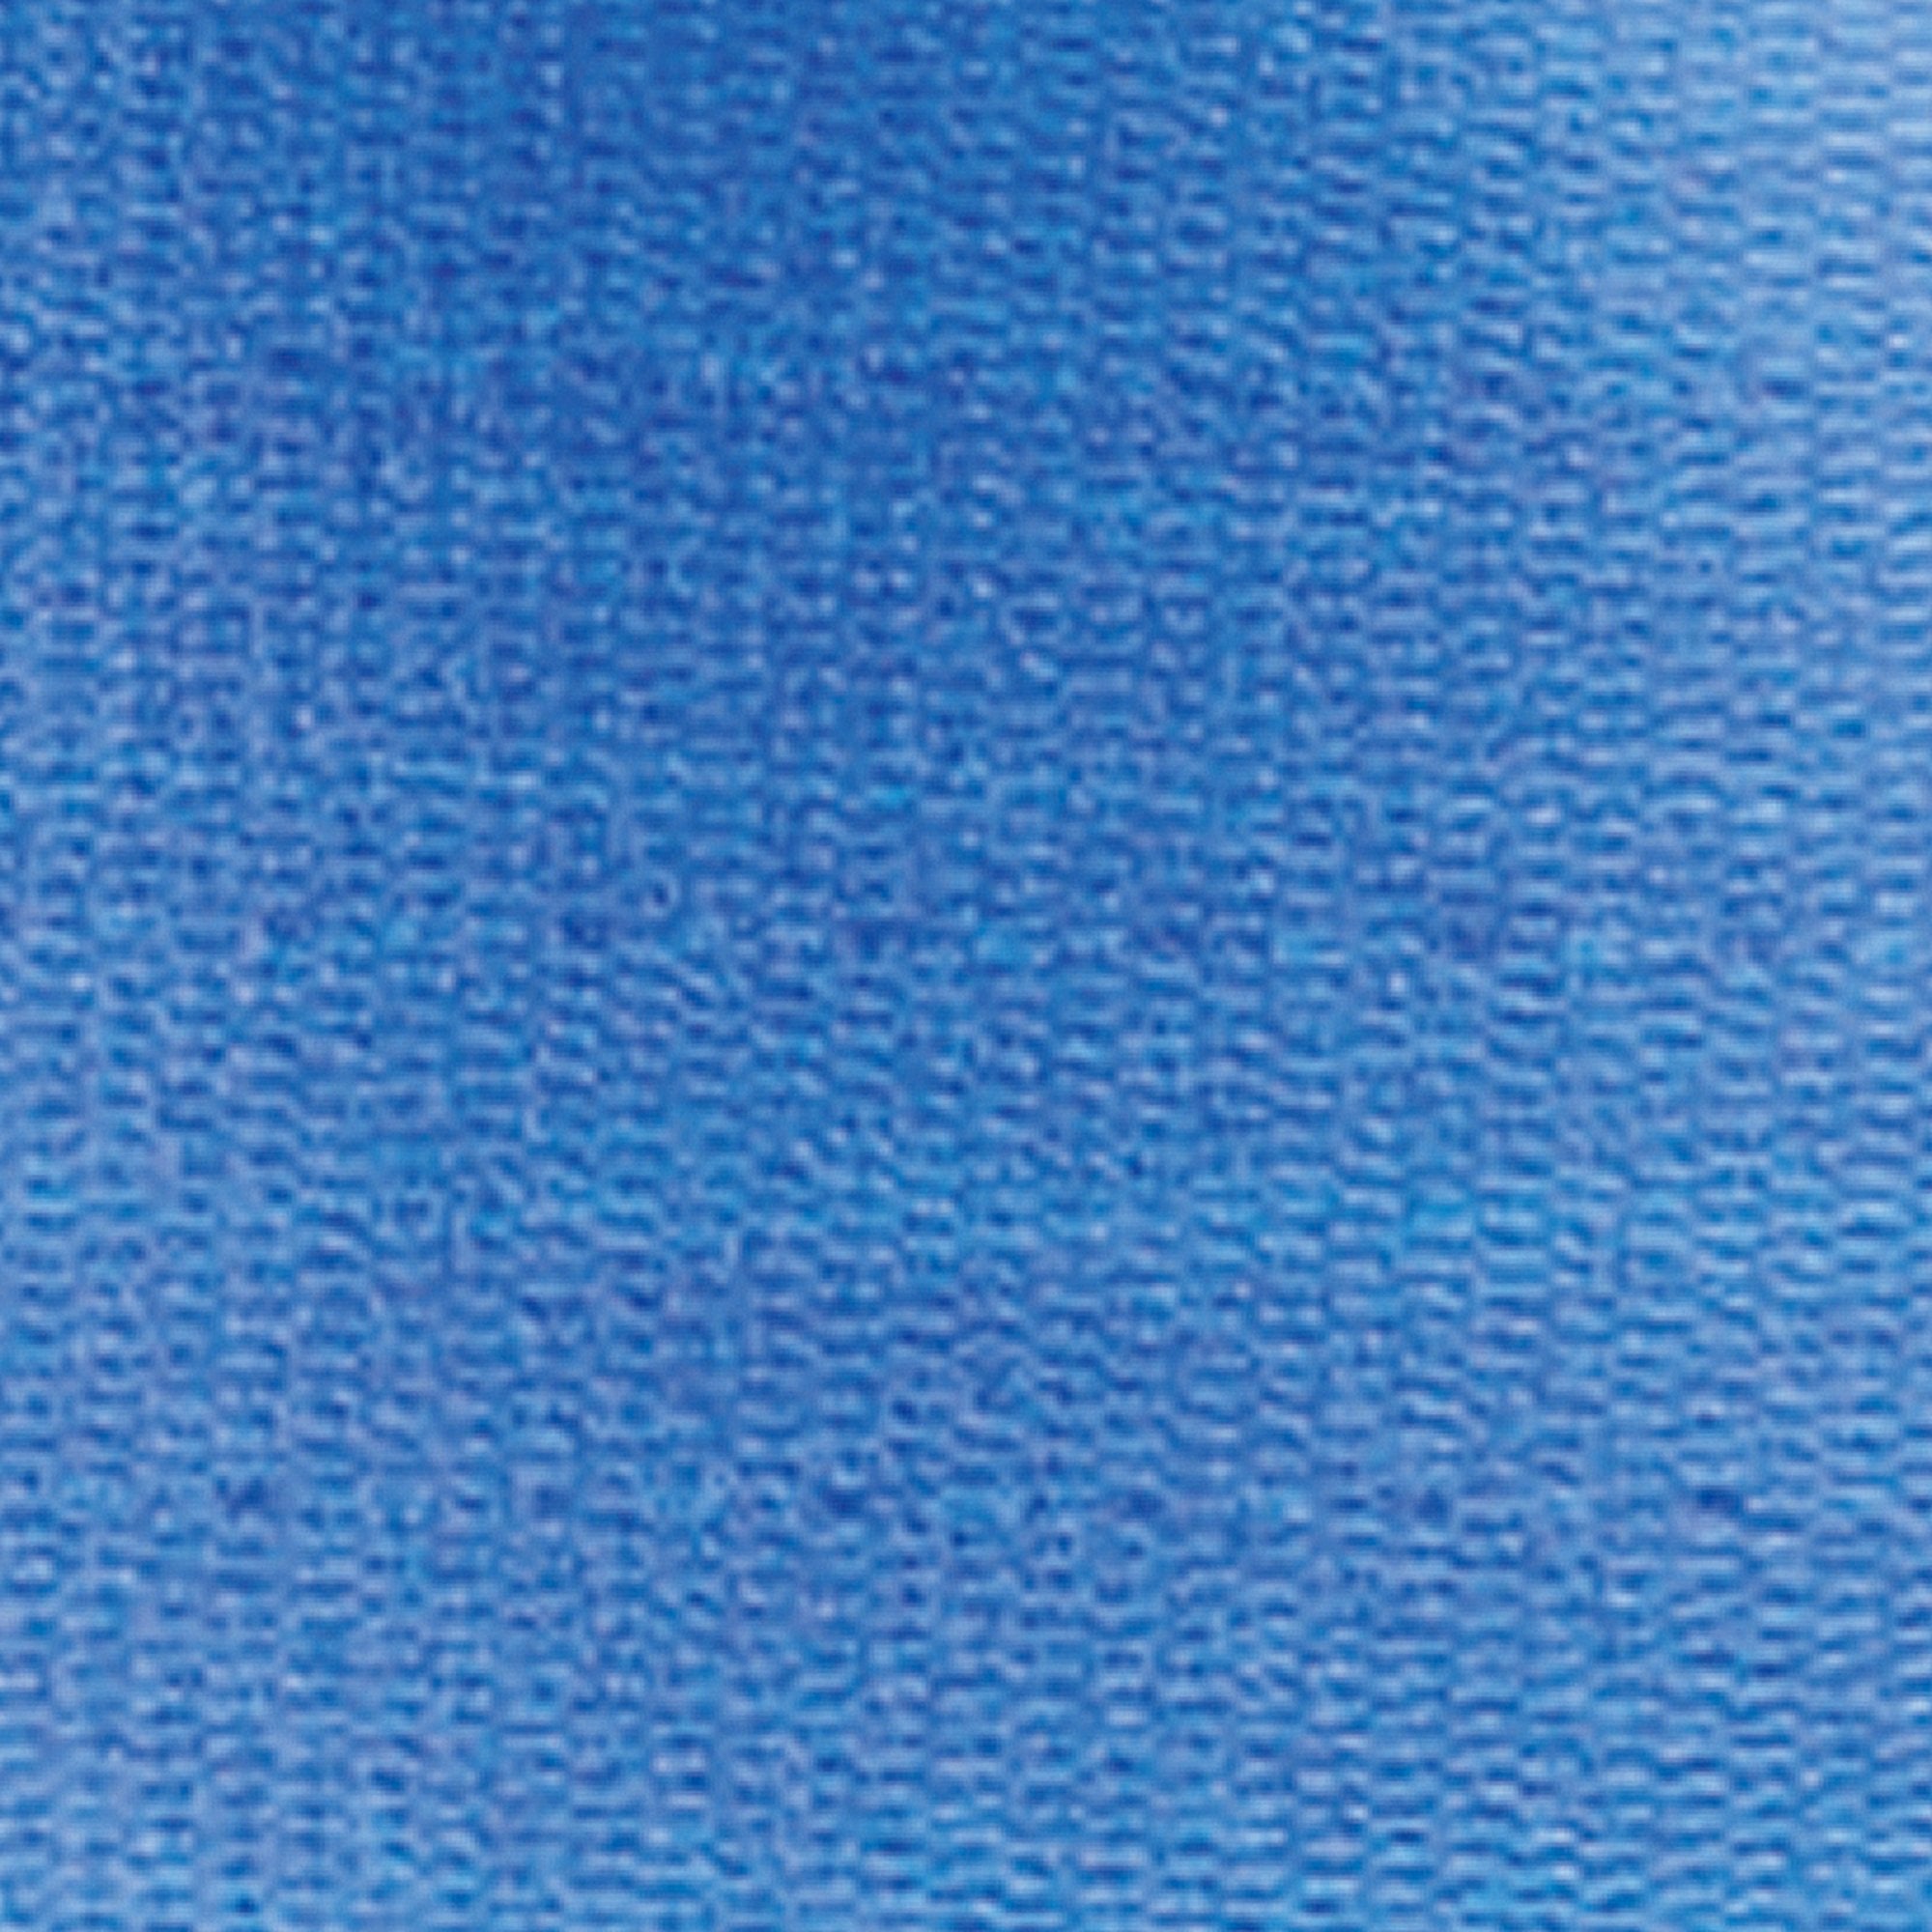 Gait Belt SkiL-Care 60 Inch Length Blue Vinyl